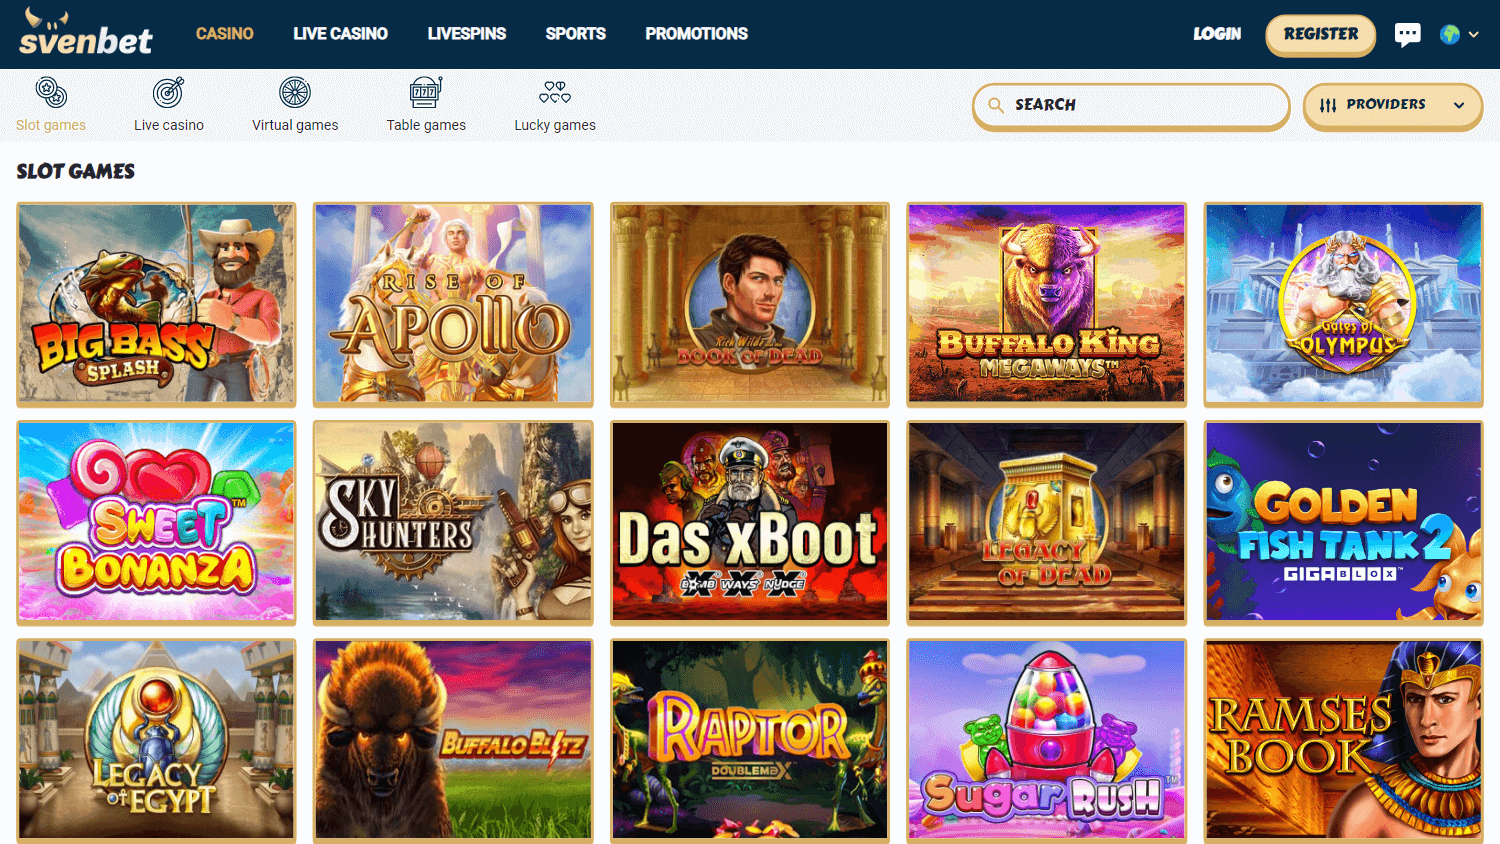 svenbet_casino_game_gallery_desktop